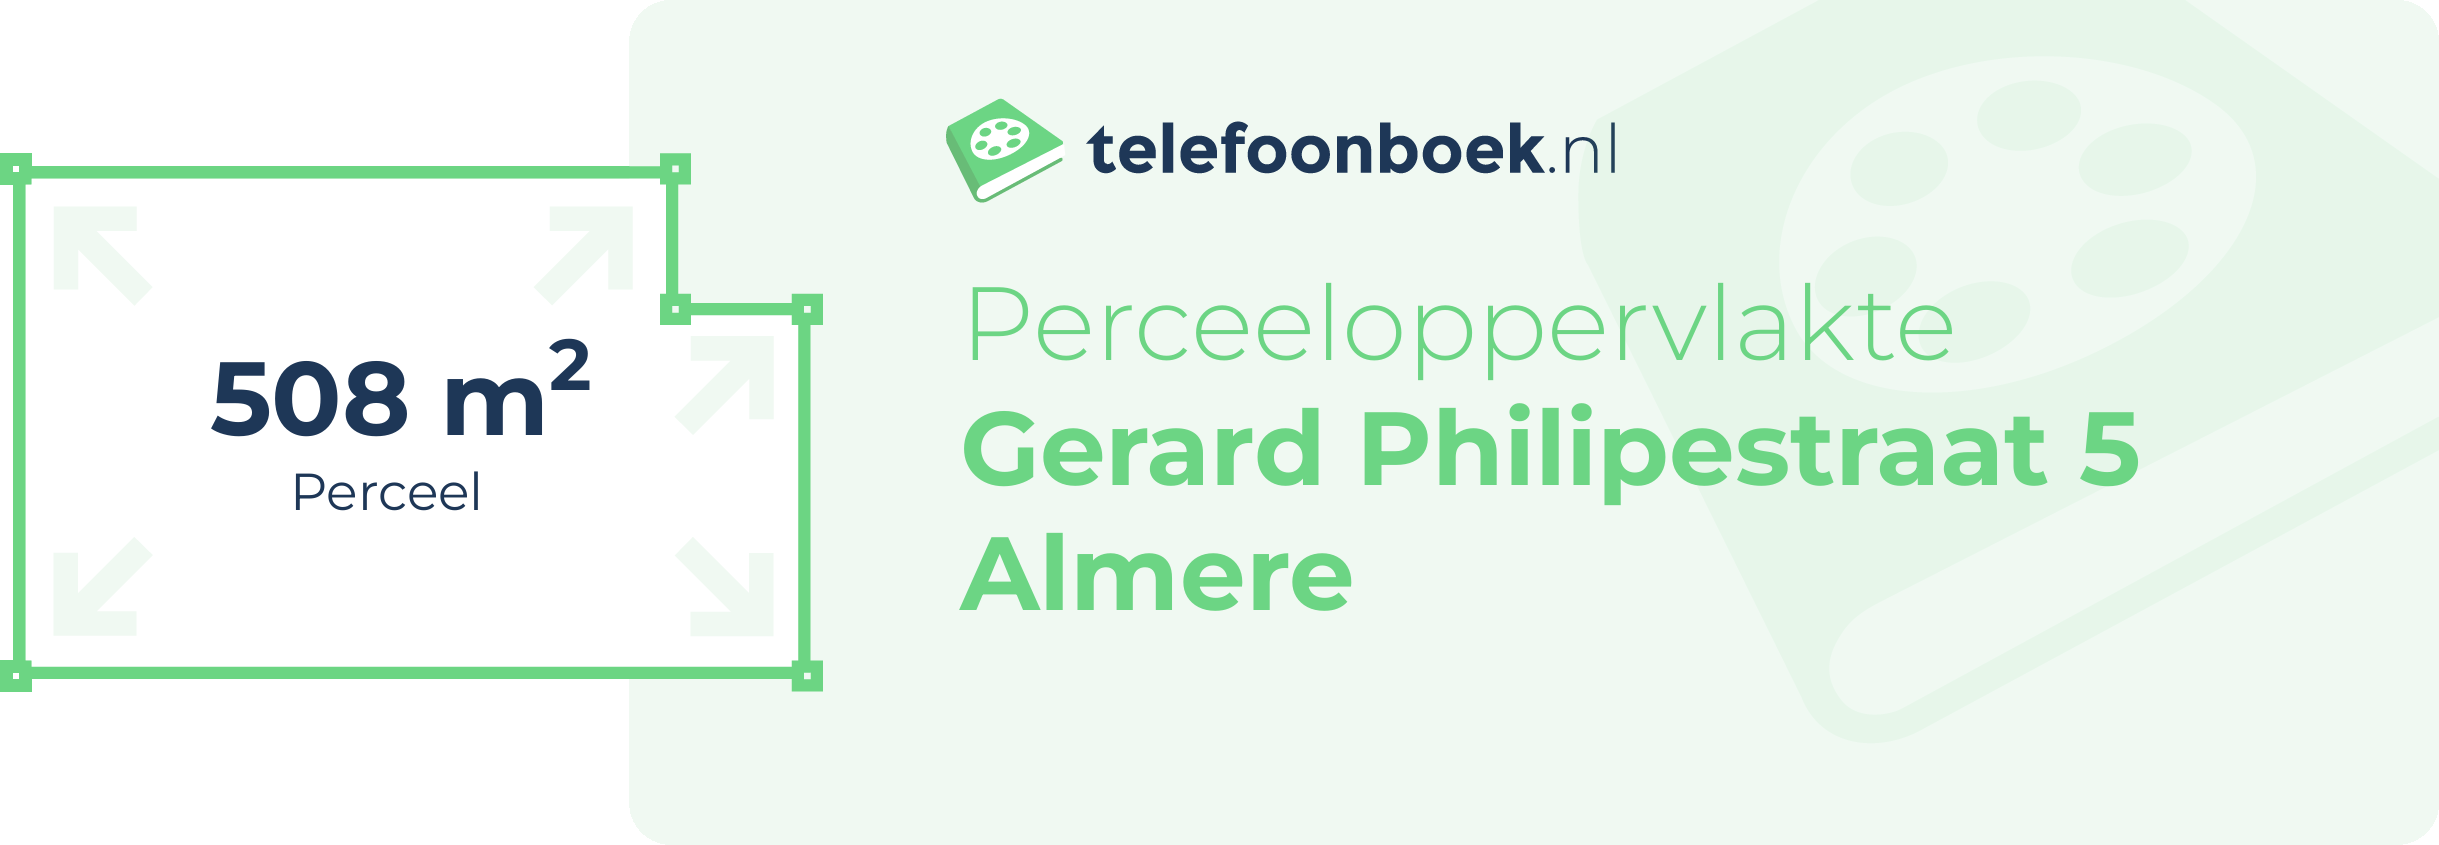 Perceeloppervlakte Gerard Philipestraat 5 Almere